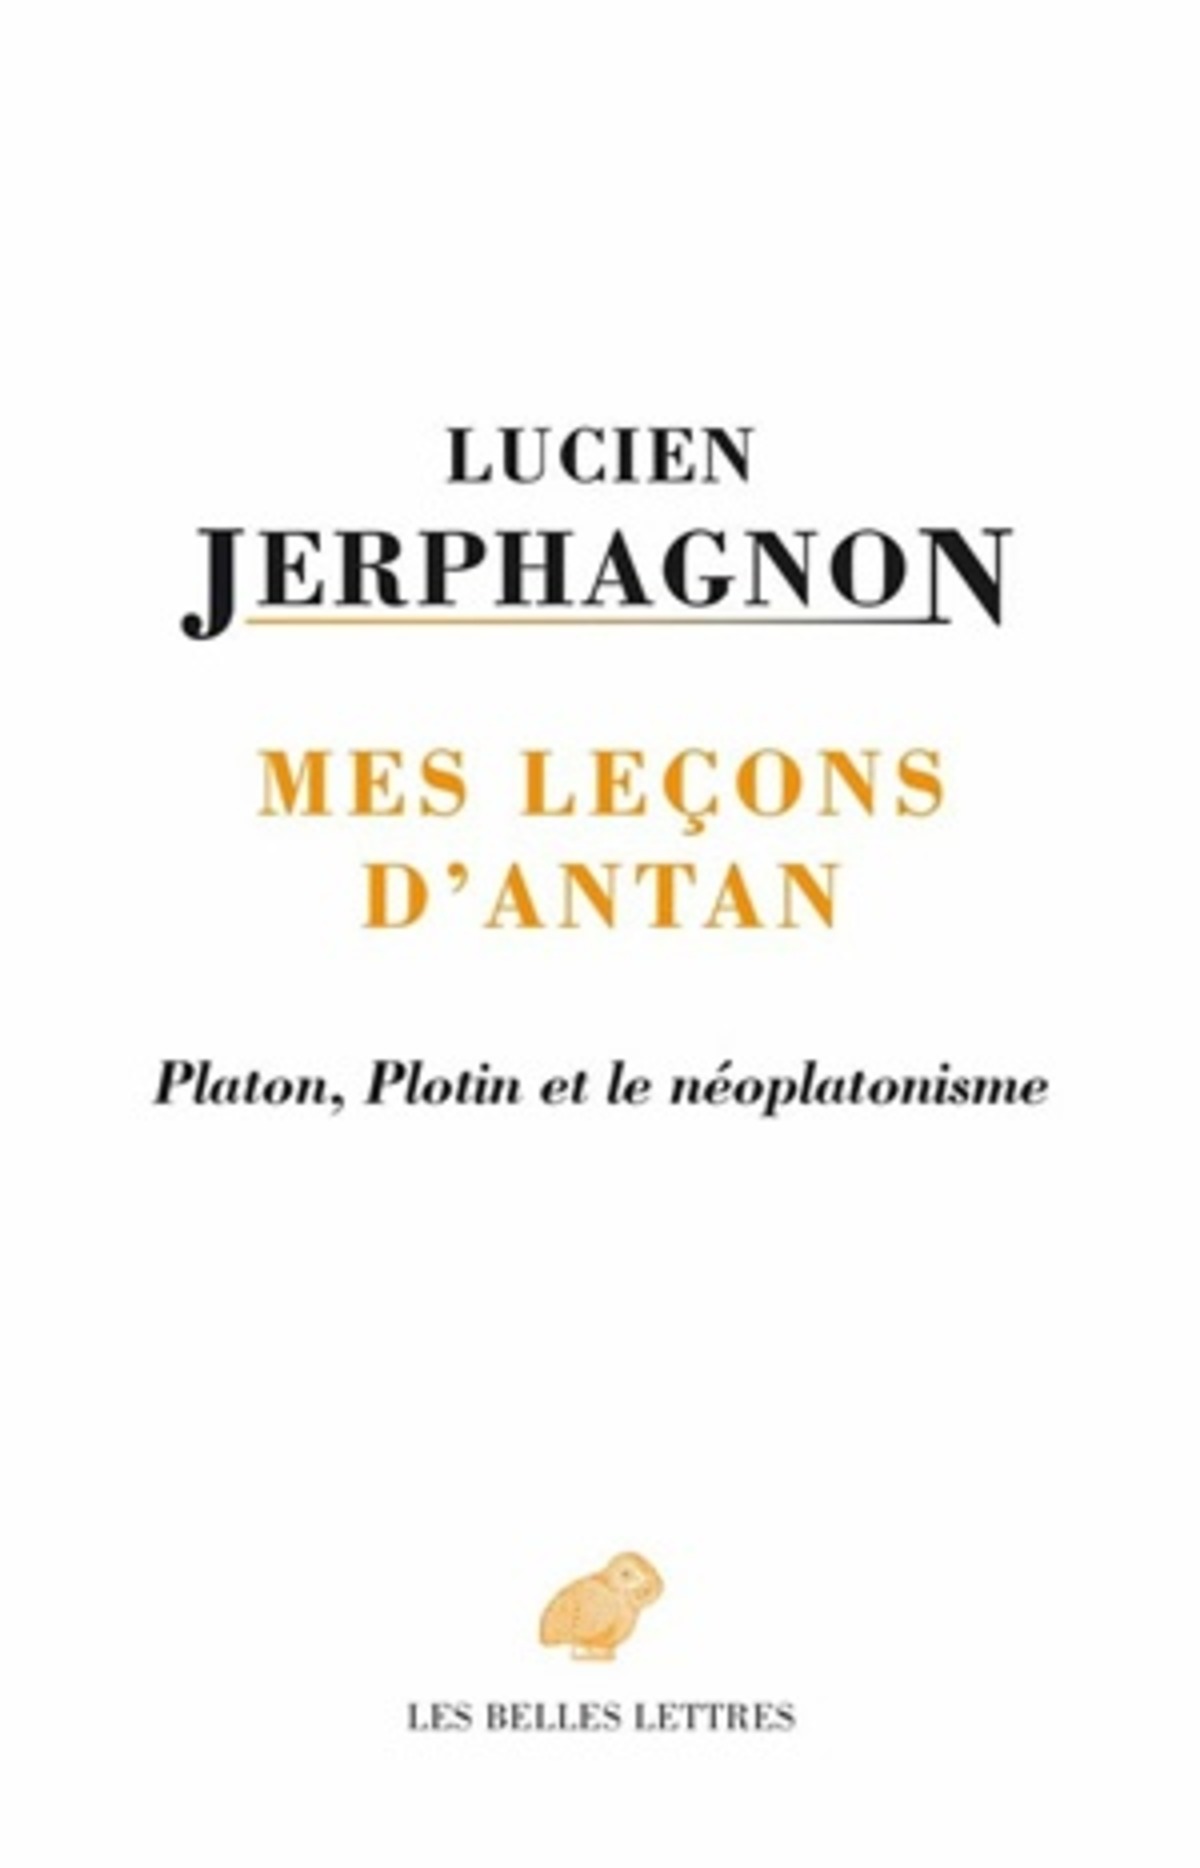 Mes Leçons d'antan : Platon, Plotin et le néoplatonisme